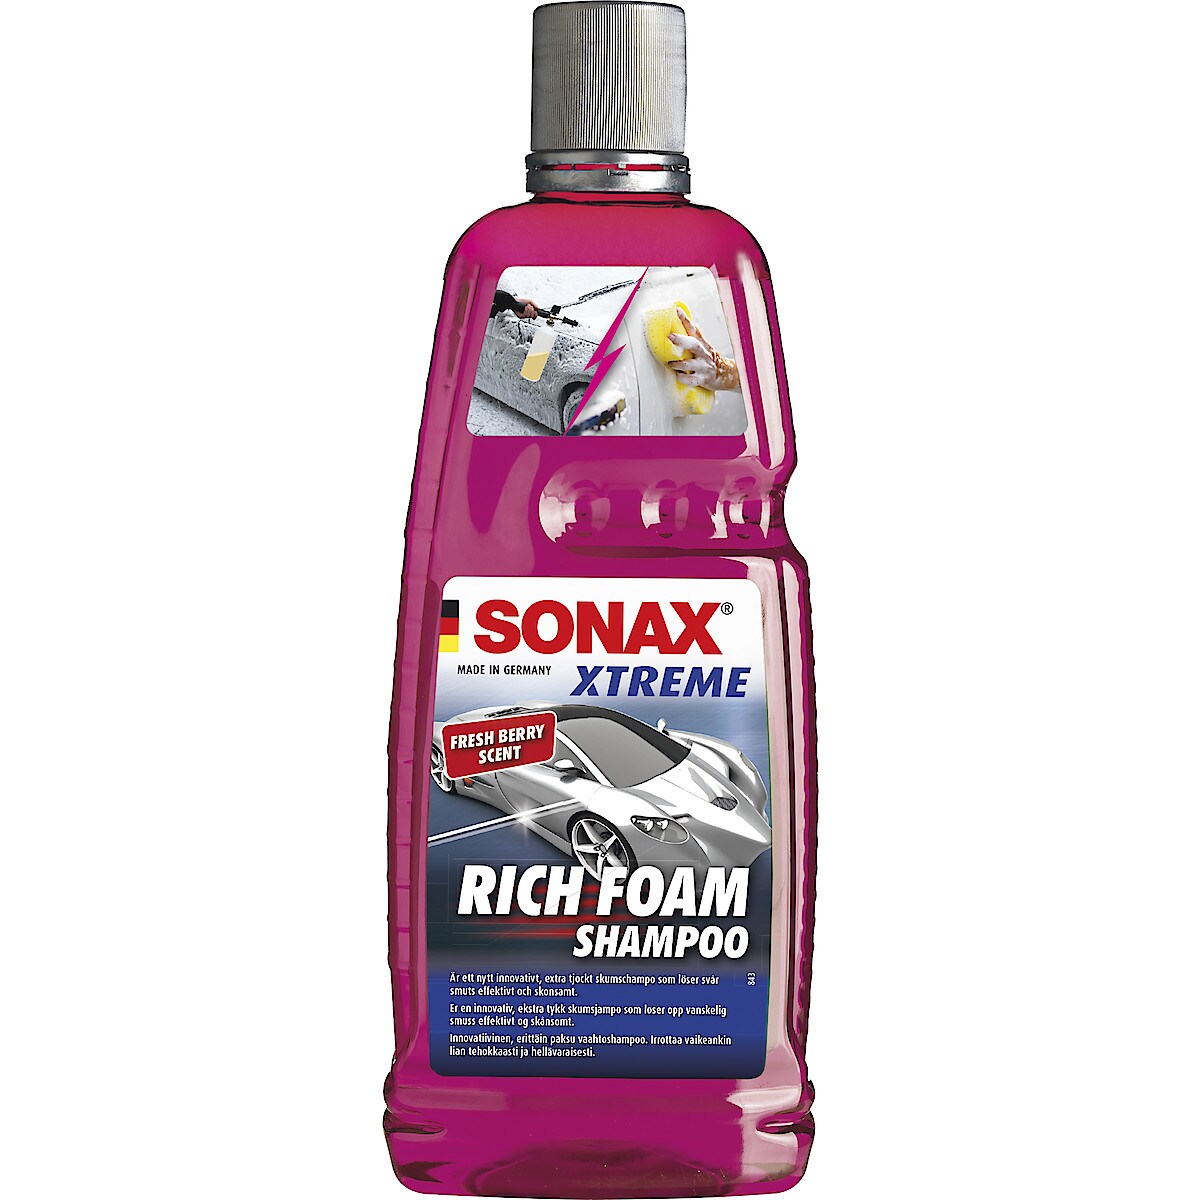 Sonax Xtreme Rich Foam Shampoo, 1 liter